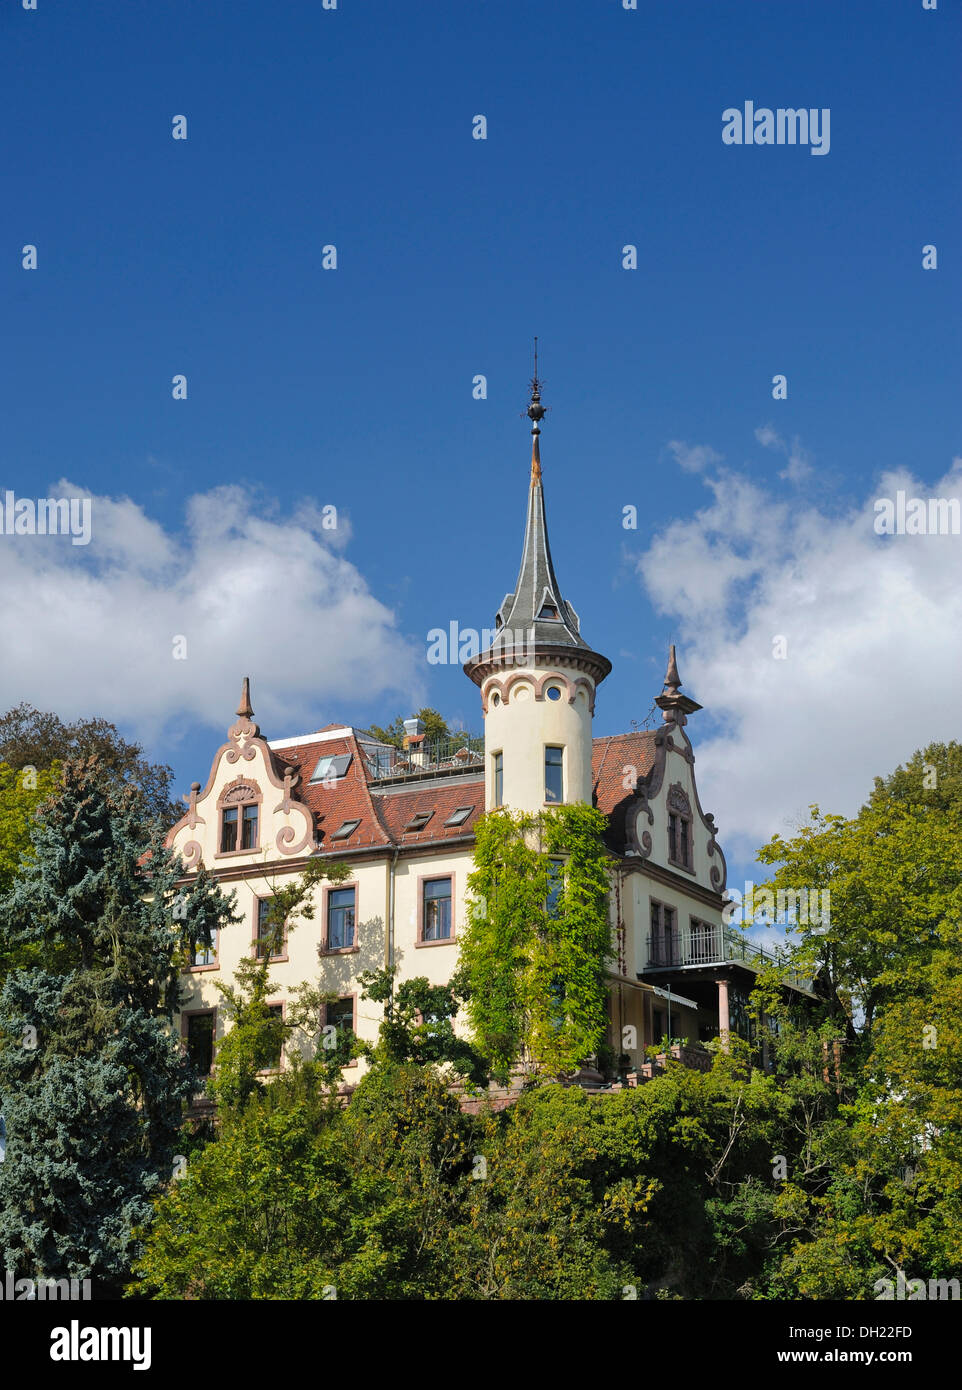 Schloss Gattersburg castle, Grimma, Saxony Stock Photo